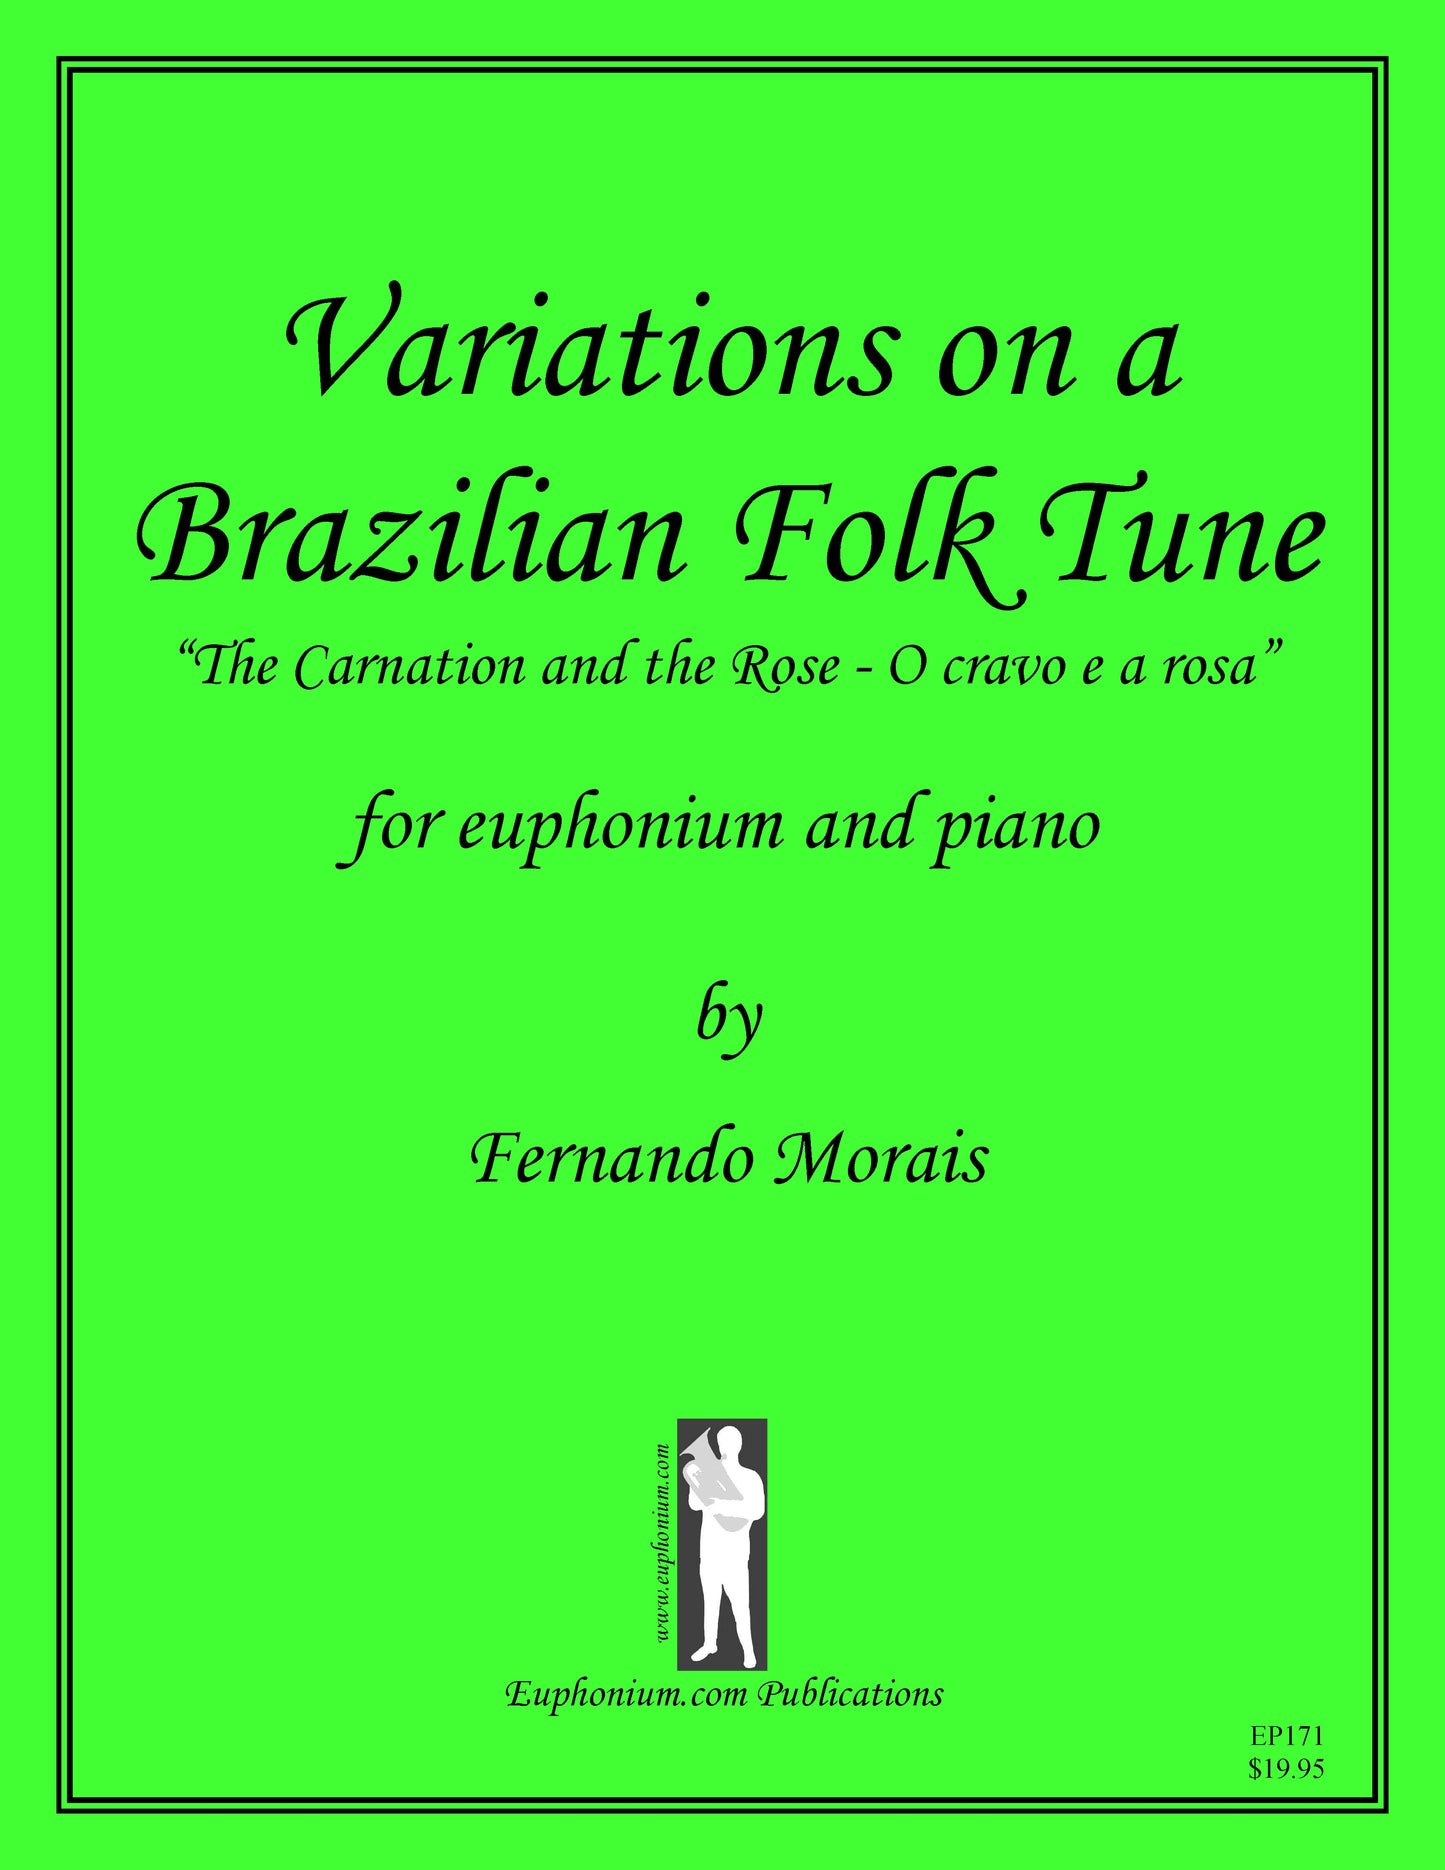 Morais - Variations on a Brazilian Folk Tune - DOWNLOAD